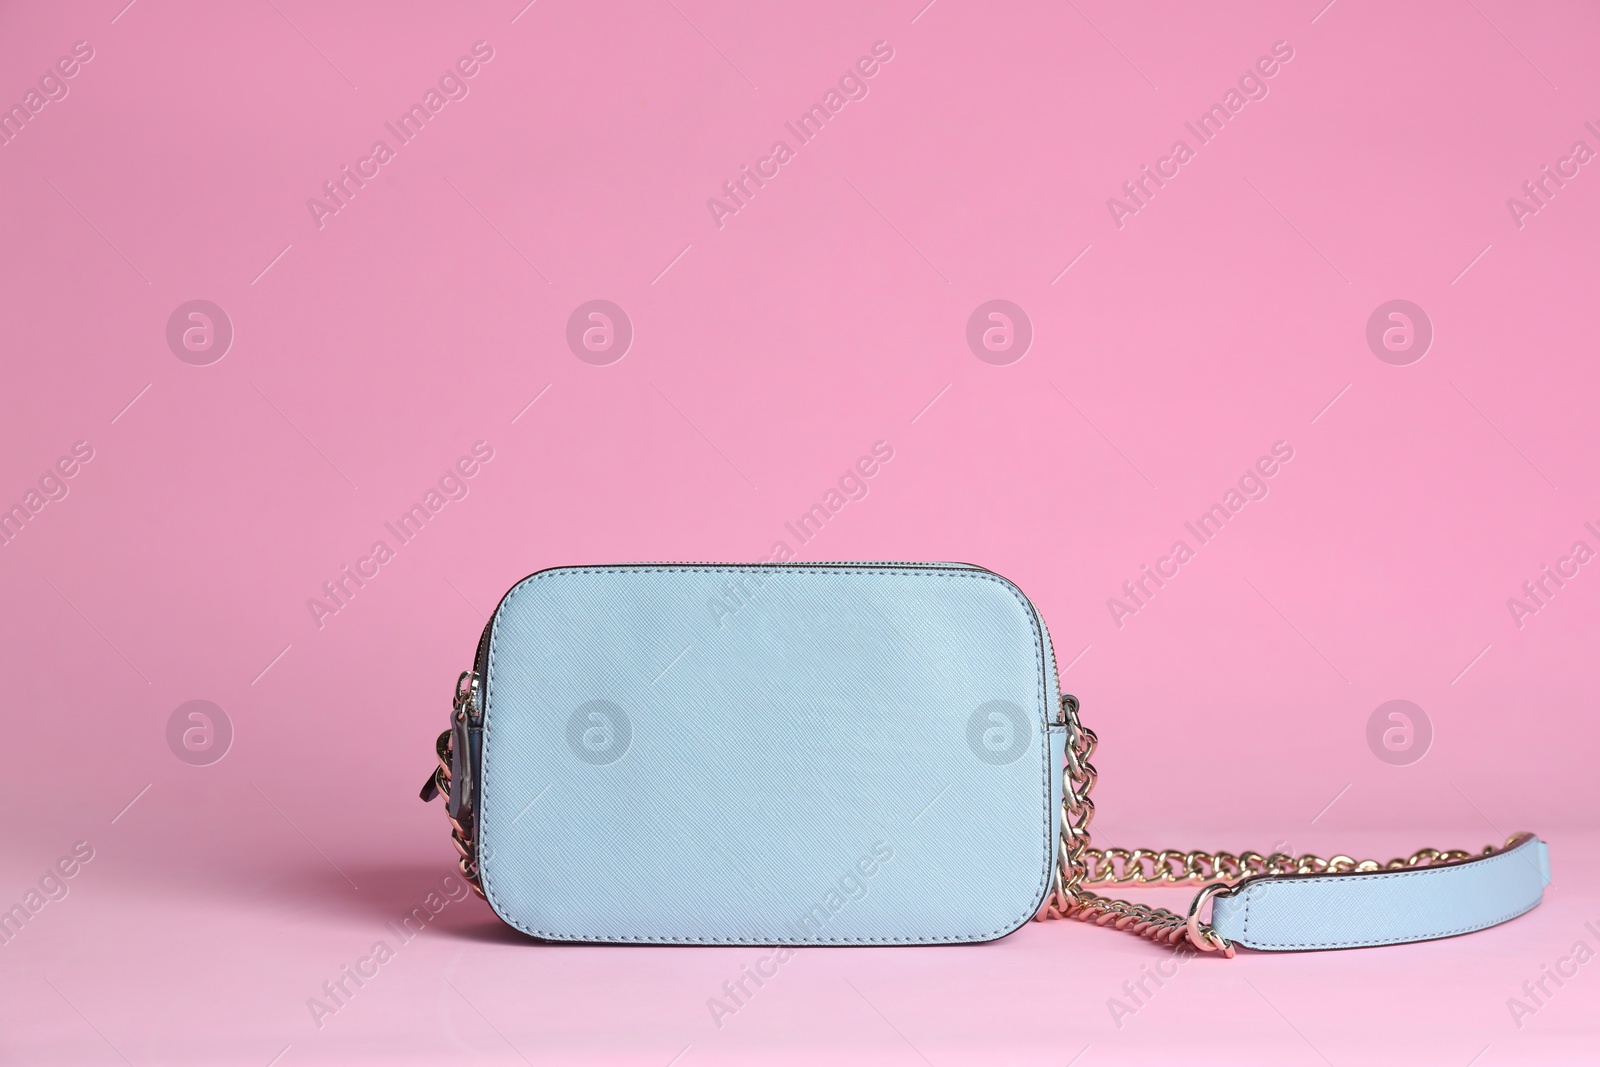 Photo of Stylish woman's bag on light pink background